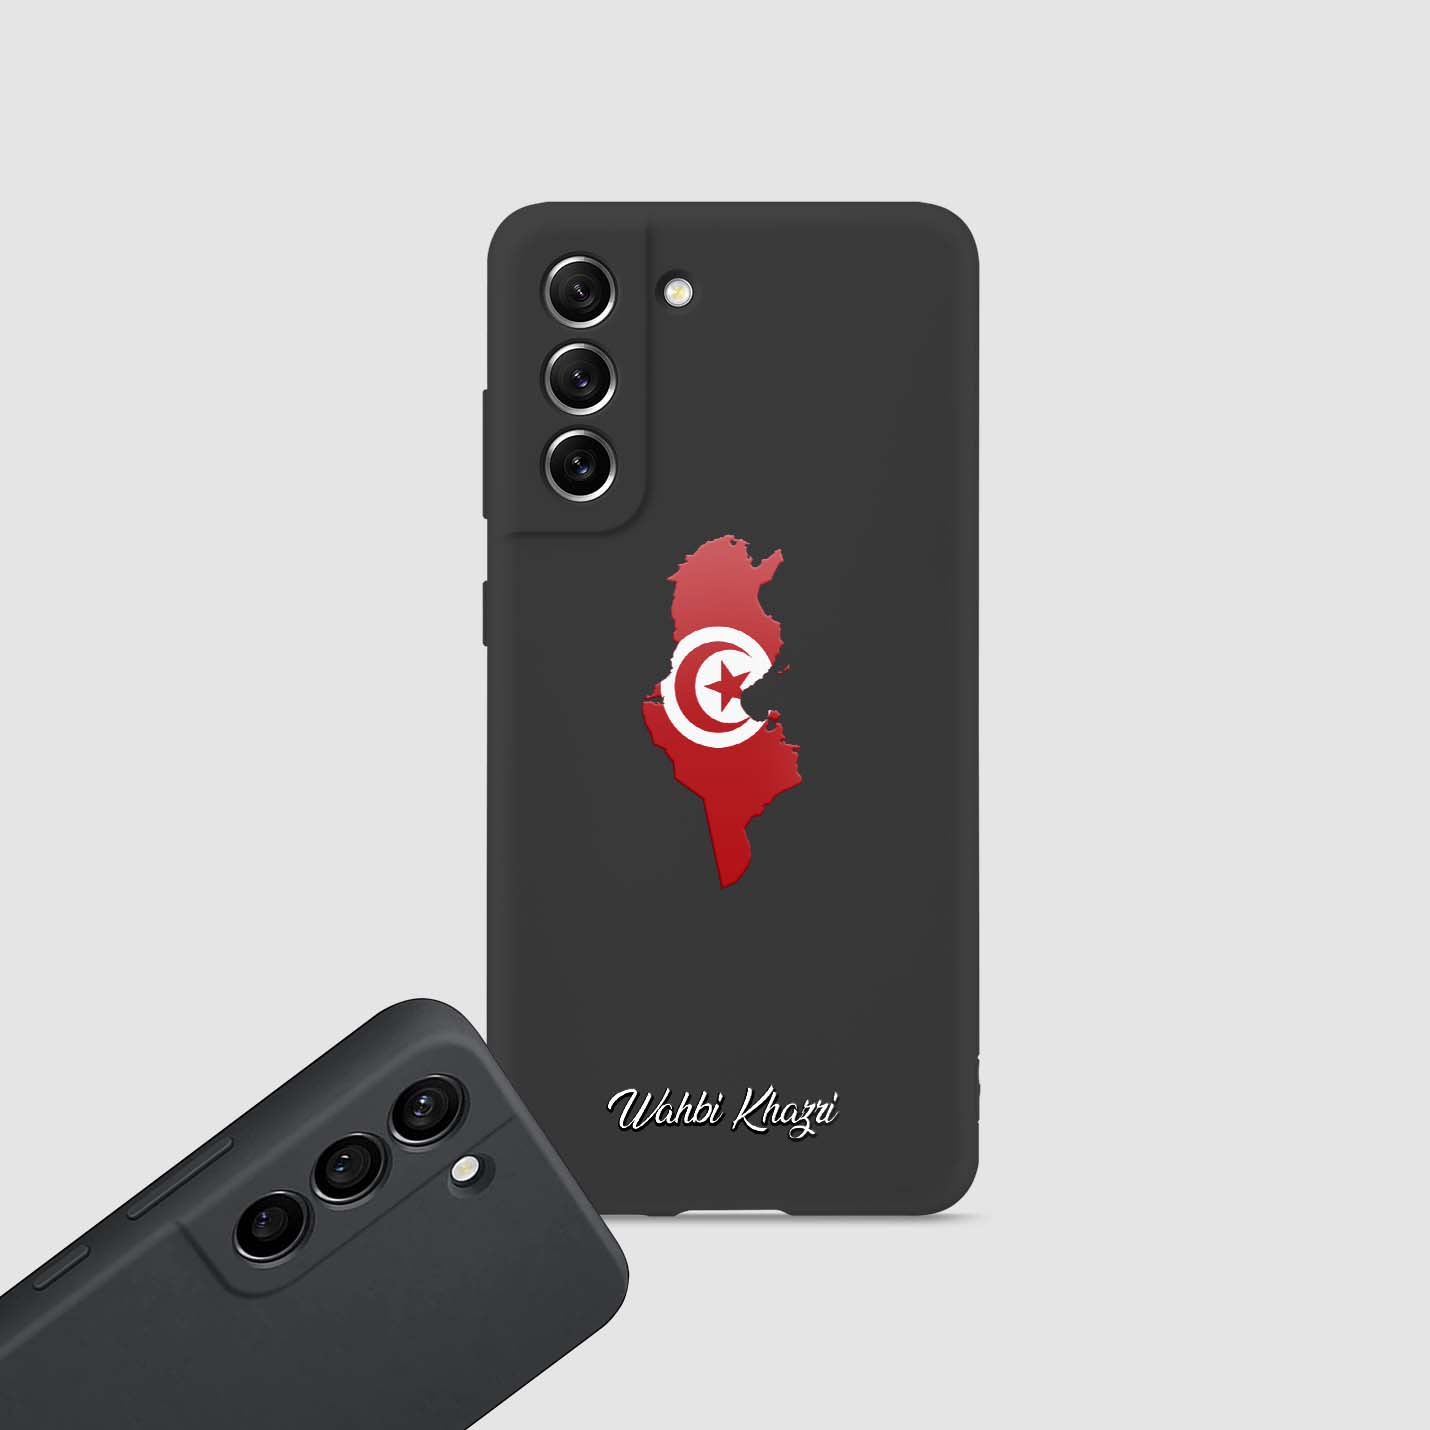 Handyhüllen mit Flagge - Tunesien - 1instaphone